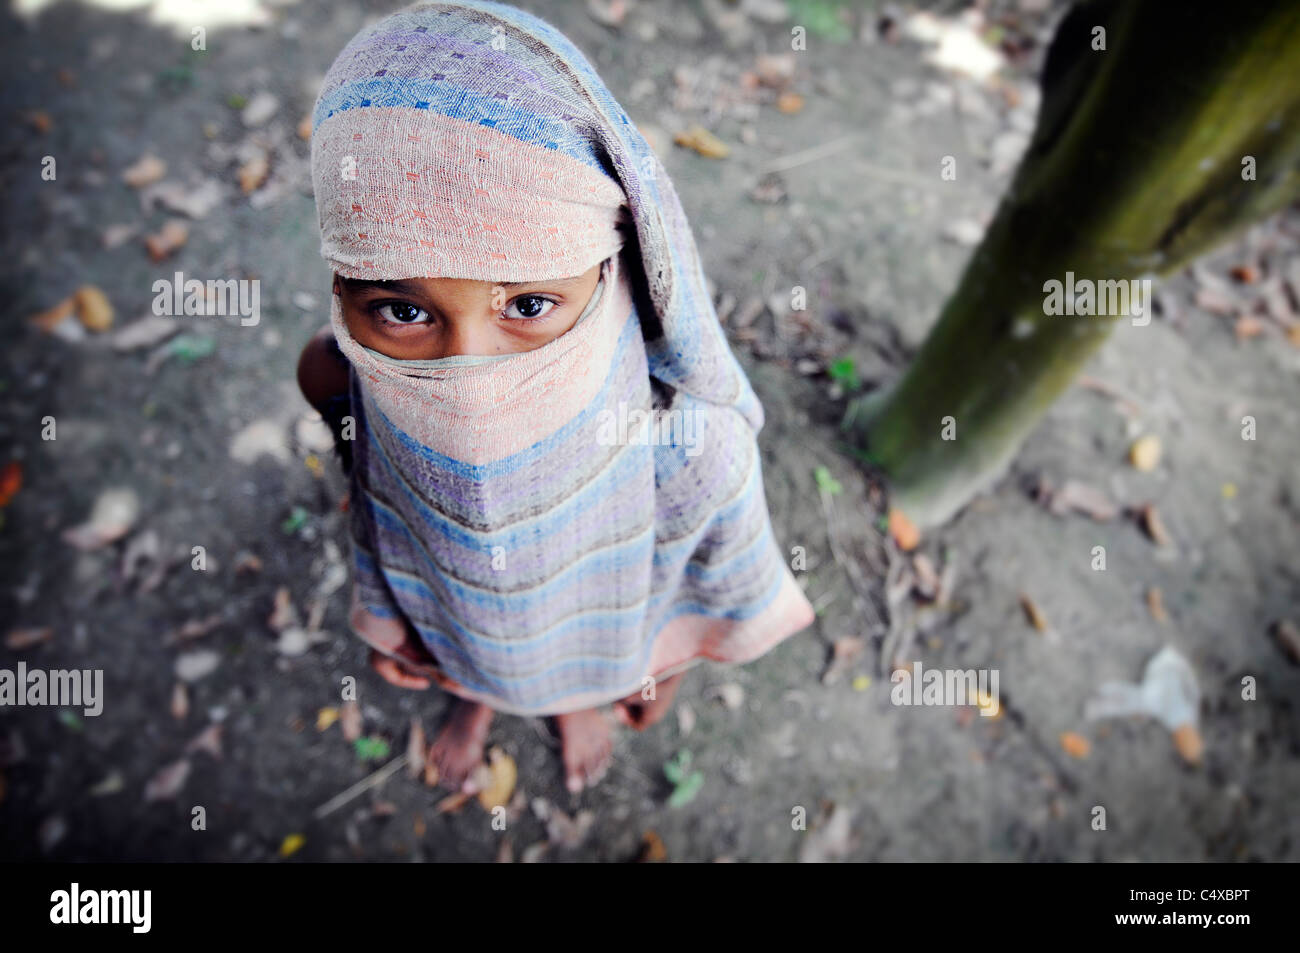 a-young-girl-wearing-a-burka-in-bangladesh-C4XBPT.jpg